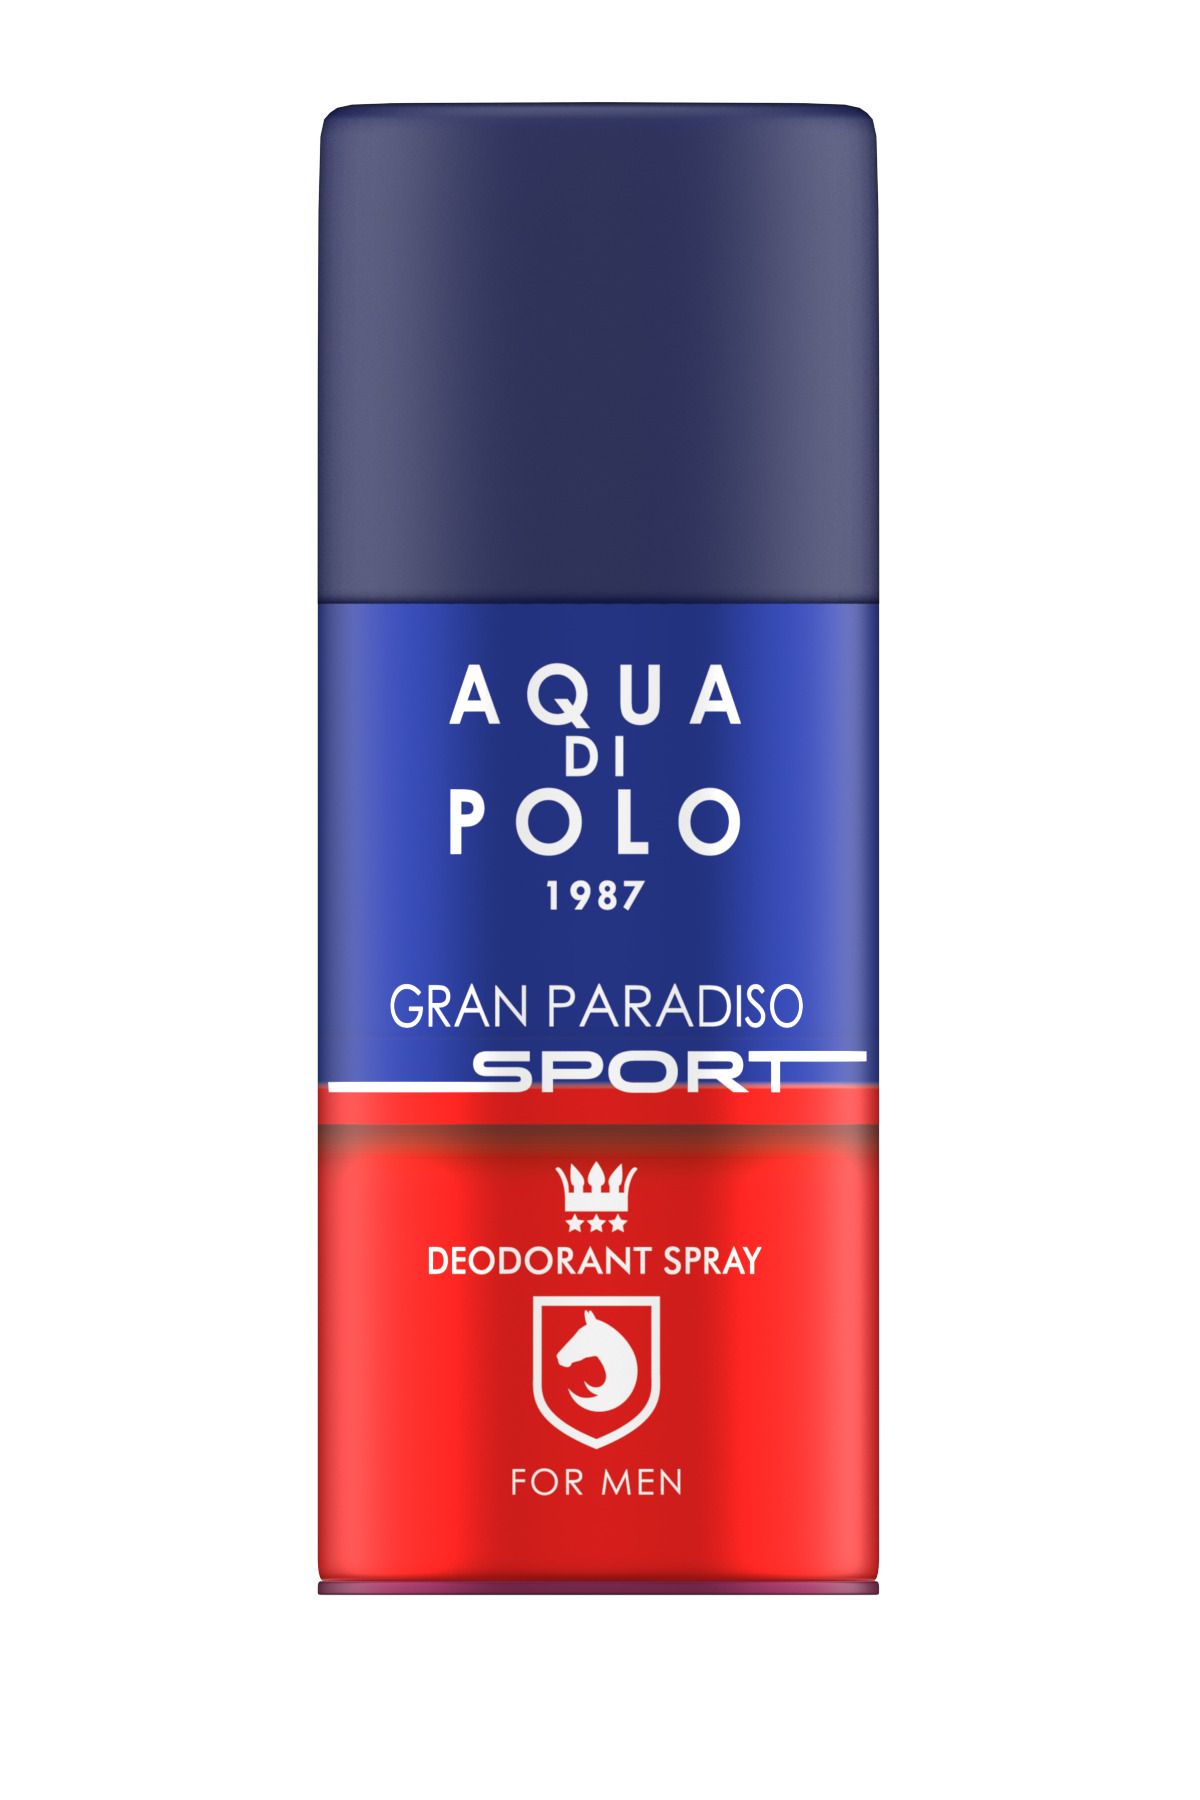 Aqua Di Polo 1987 Gran Paradiso Sport Spray Deodorant Parfüm 150 ml APCA000601